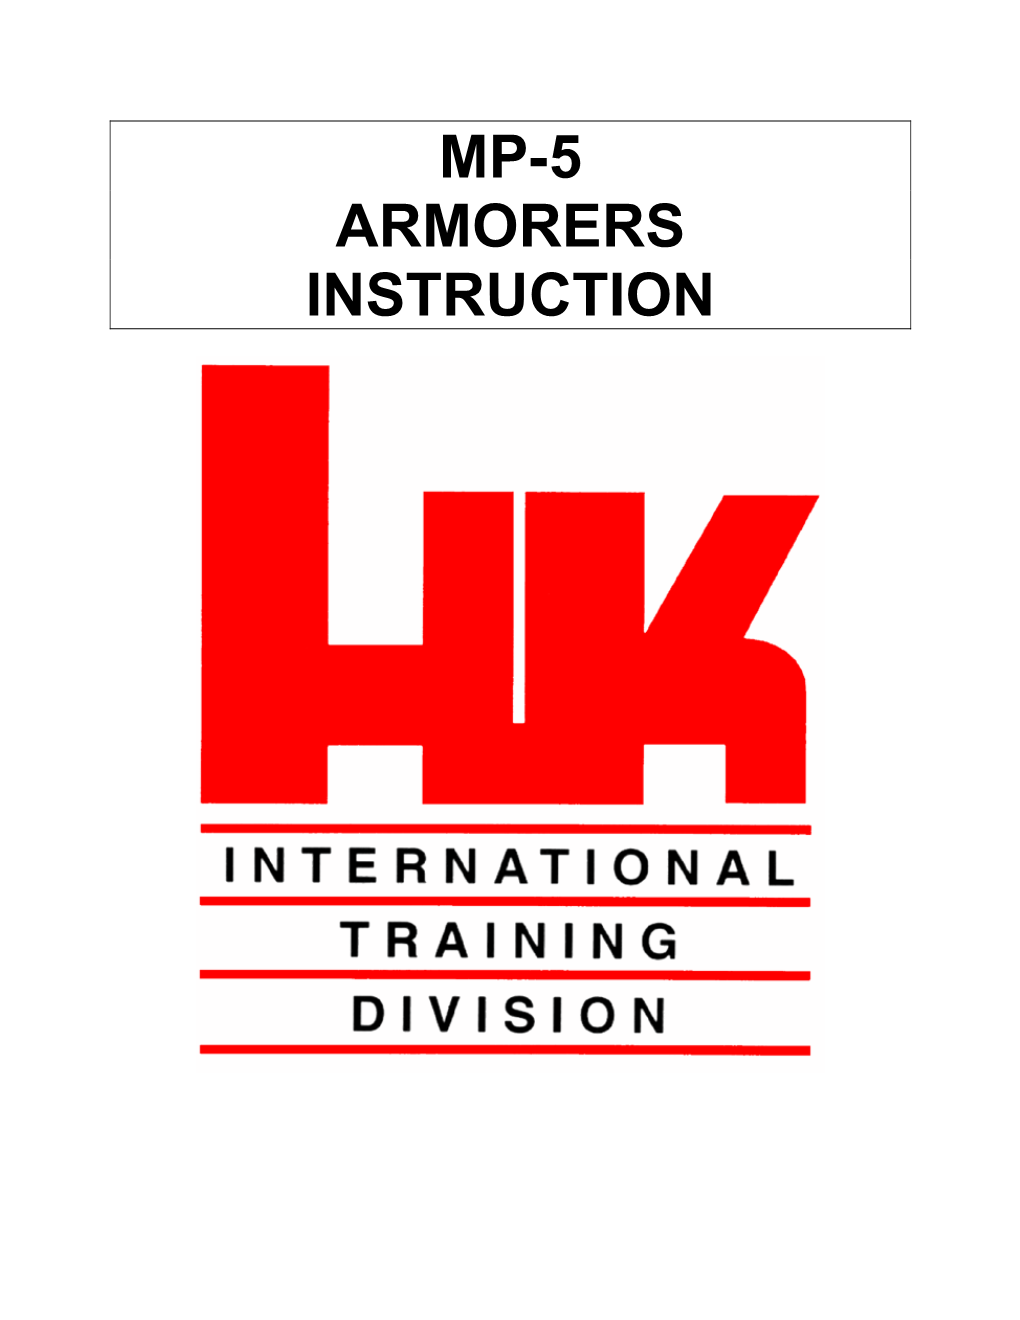 Heckler & Koch MP5 Armorer's